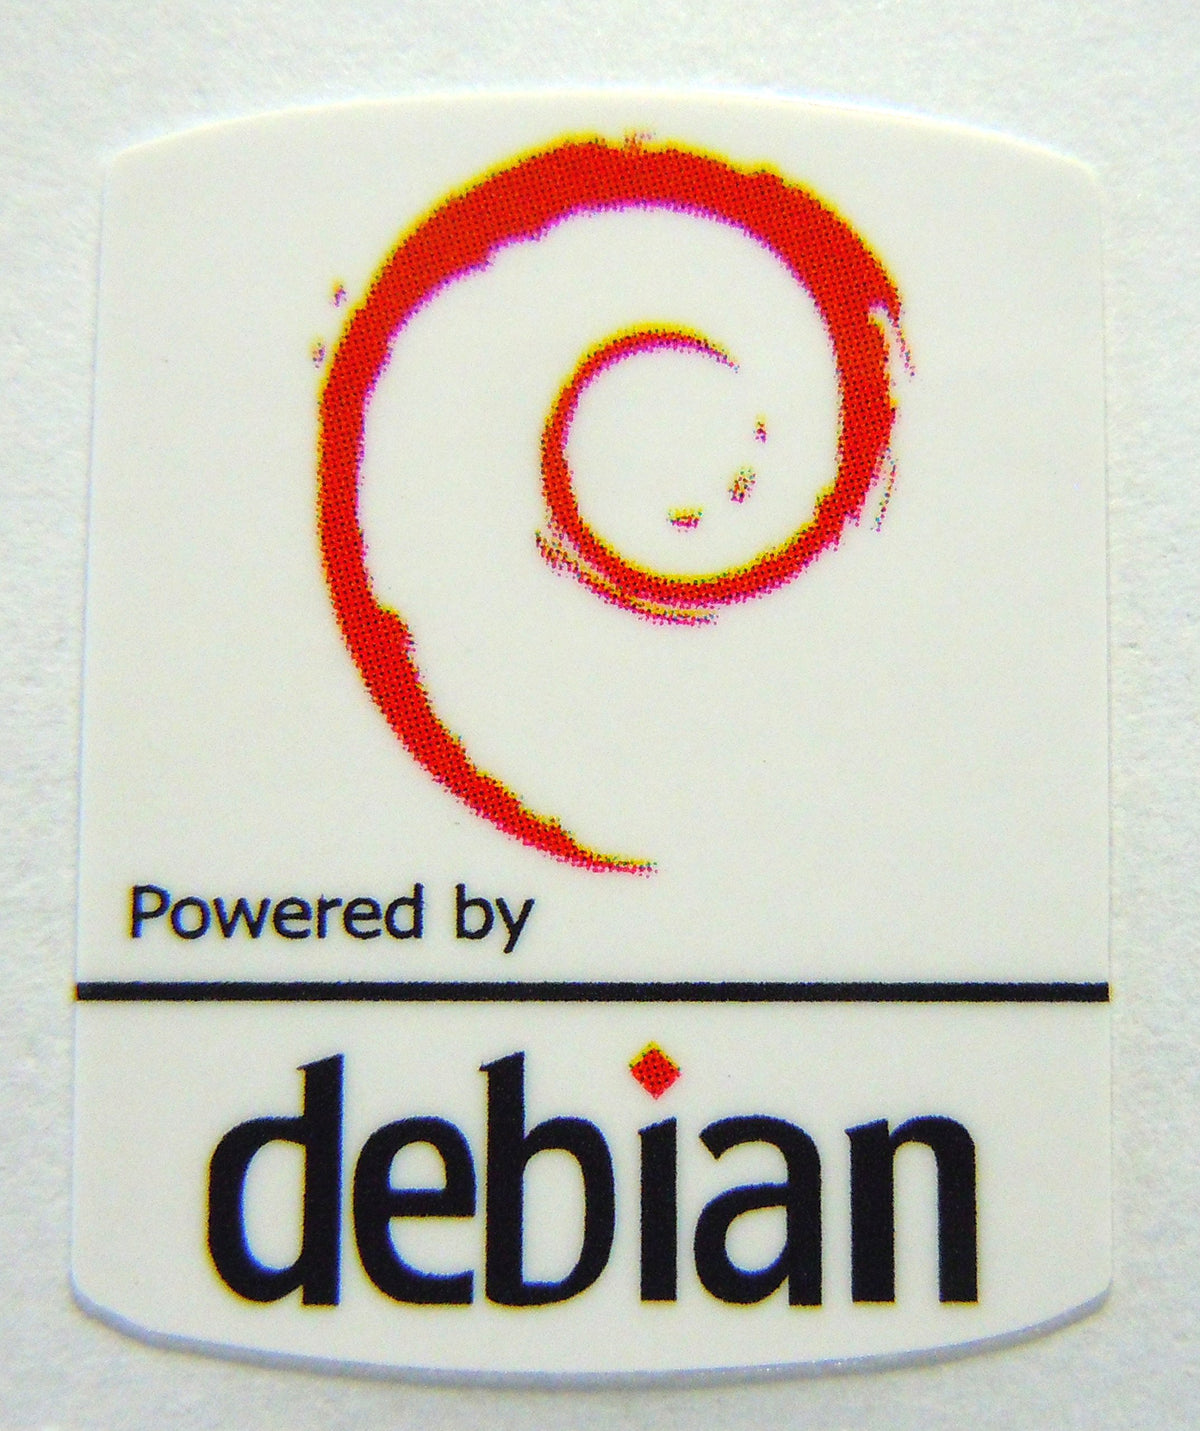 VATH Powered by Debian Linux Sticker 19 x 24mm [542]